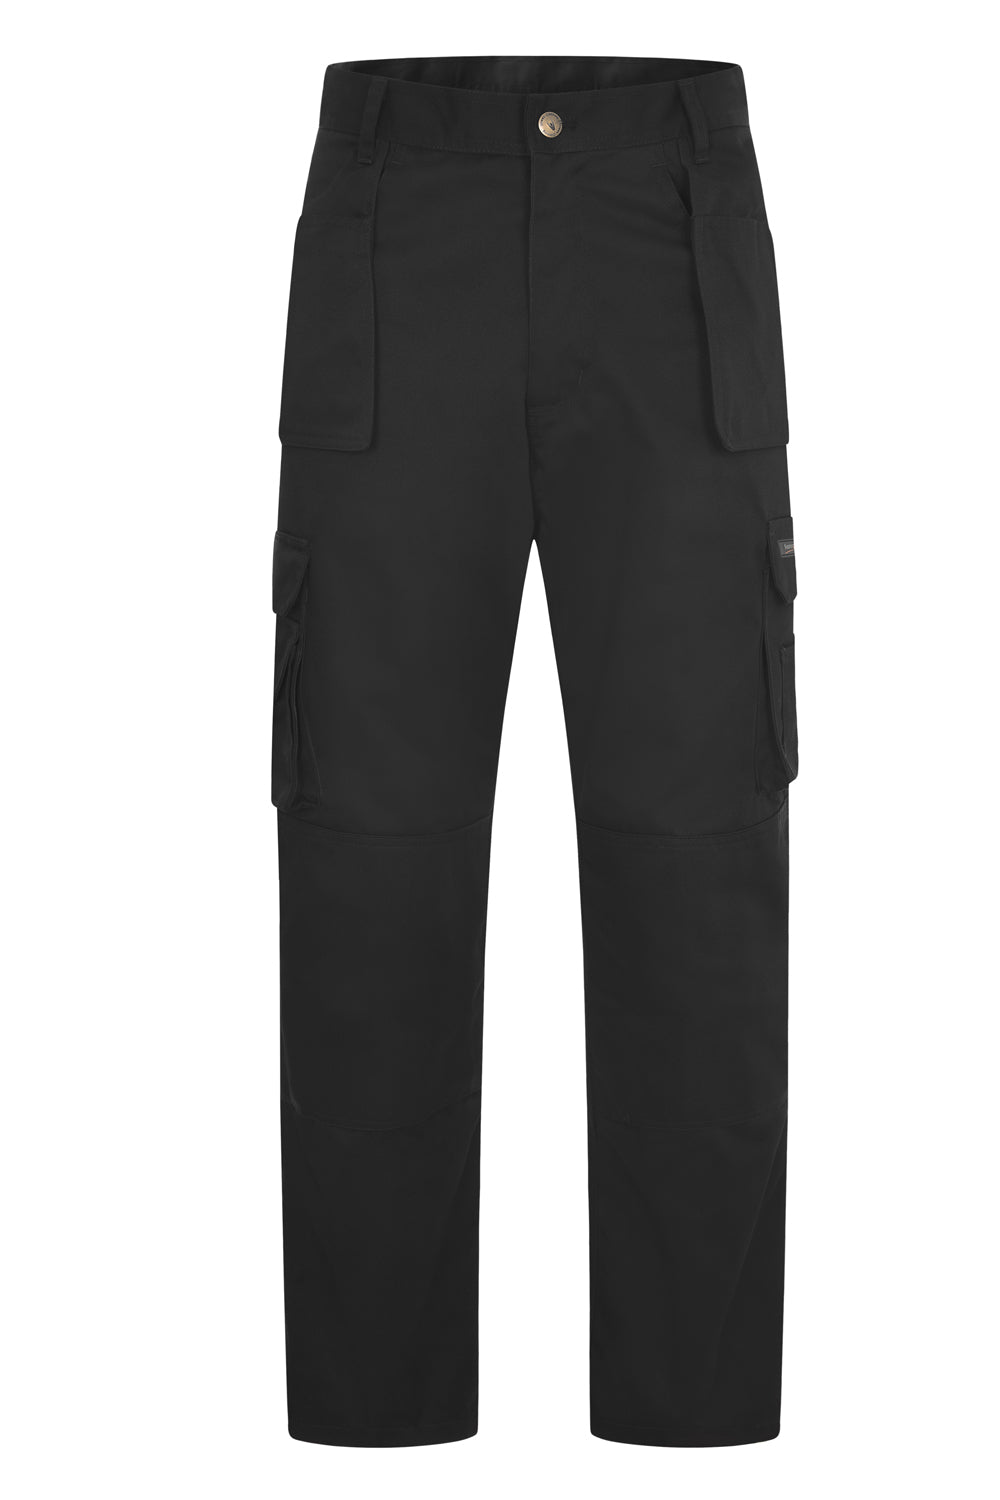 Uneek Super Pro Trouser Regular UC906R - Black